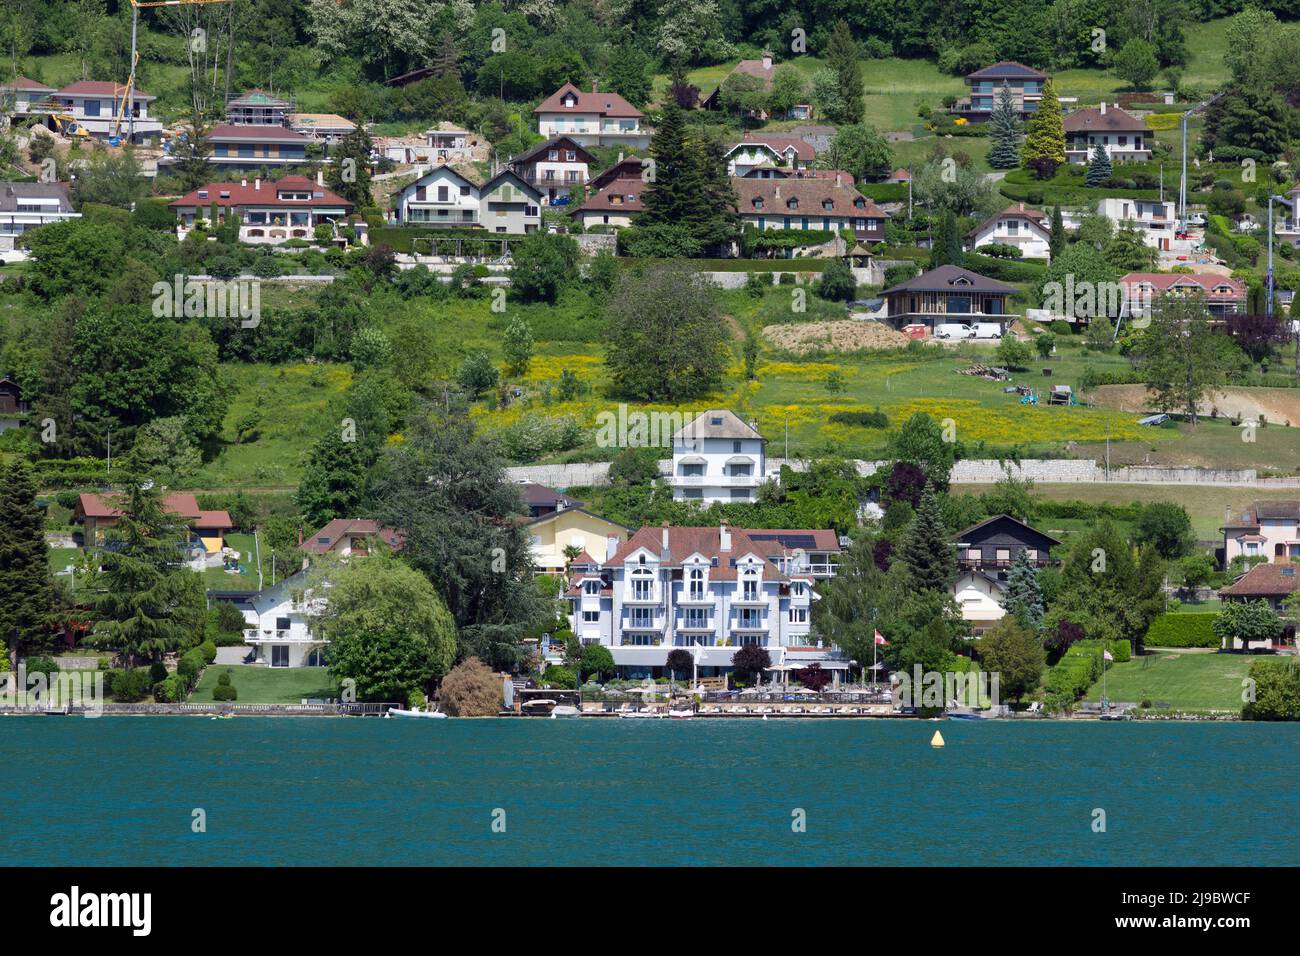 Anwesen am See, in Annecy, Frankreich Stockfoto